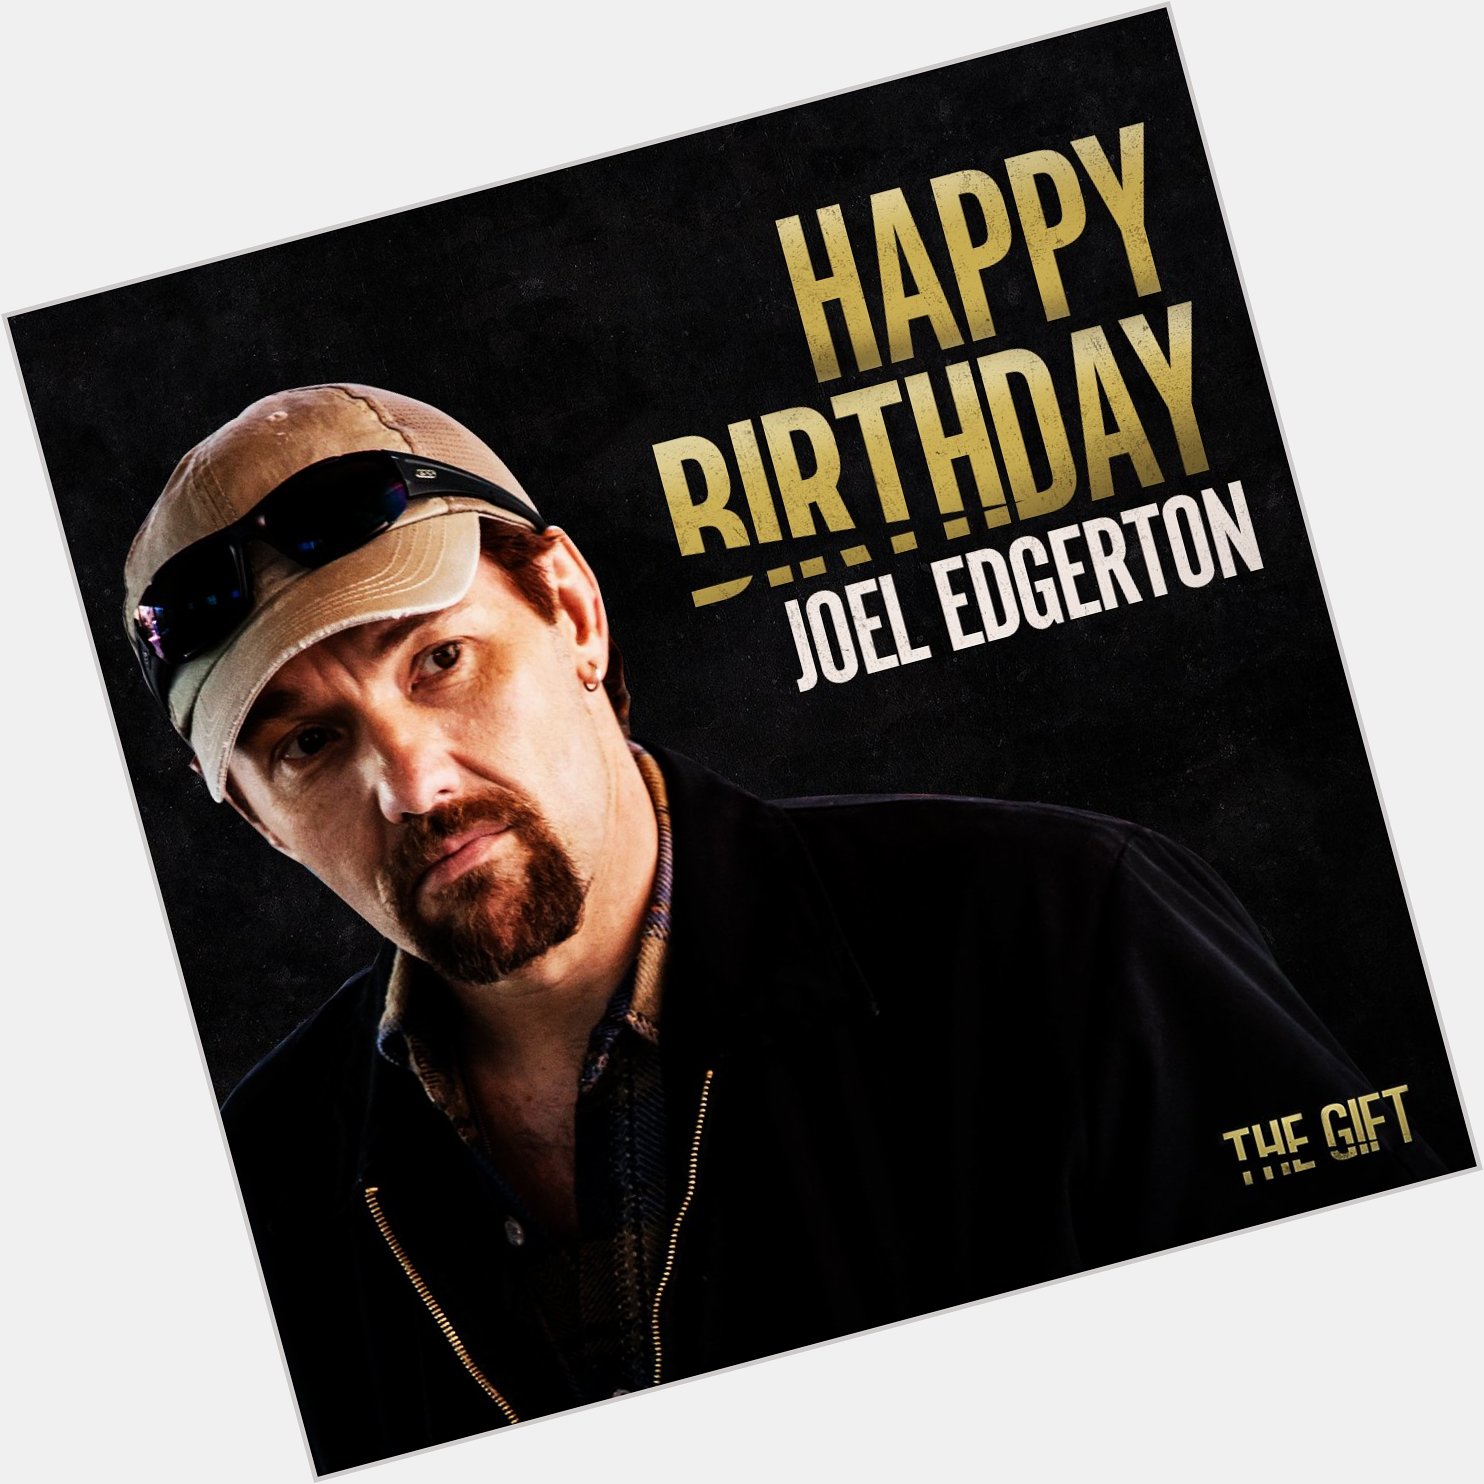 Happy birthday to the man with the terrifying plan, Joel Edgerton. 